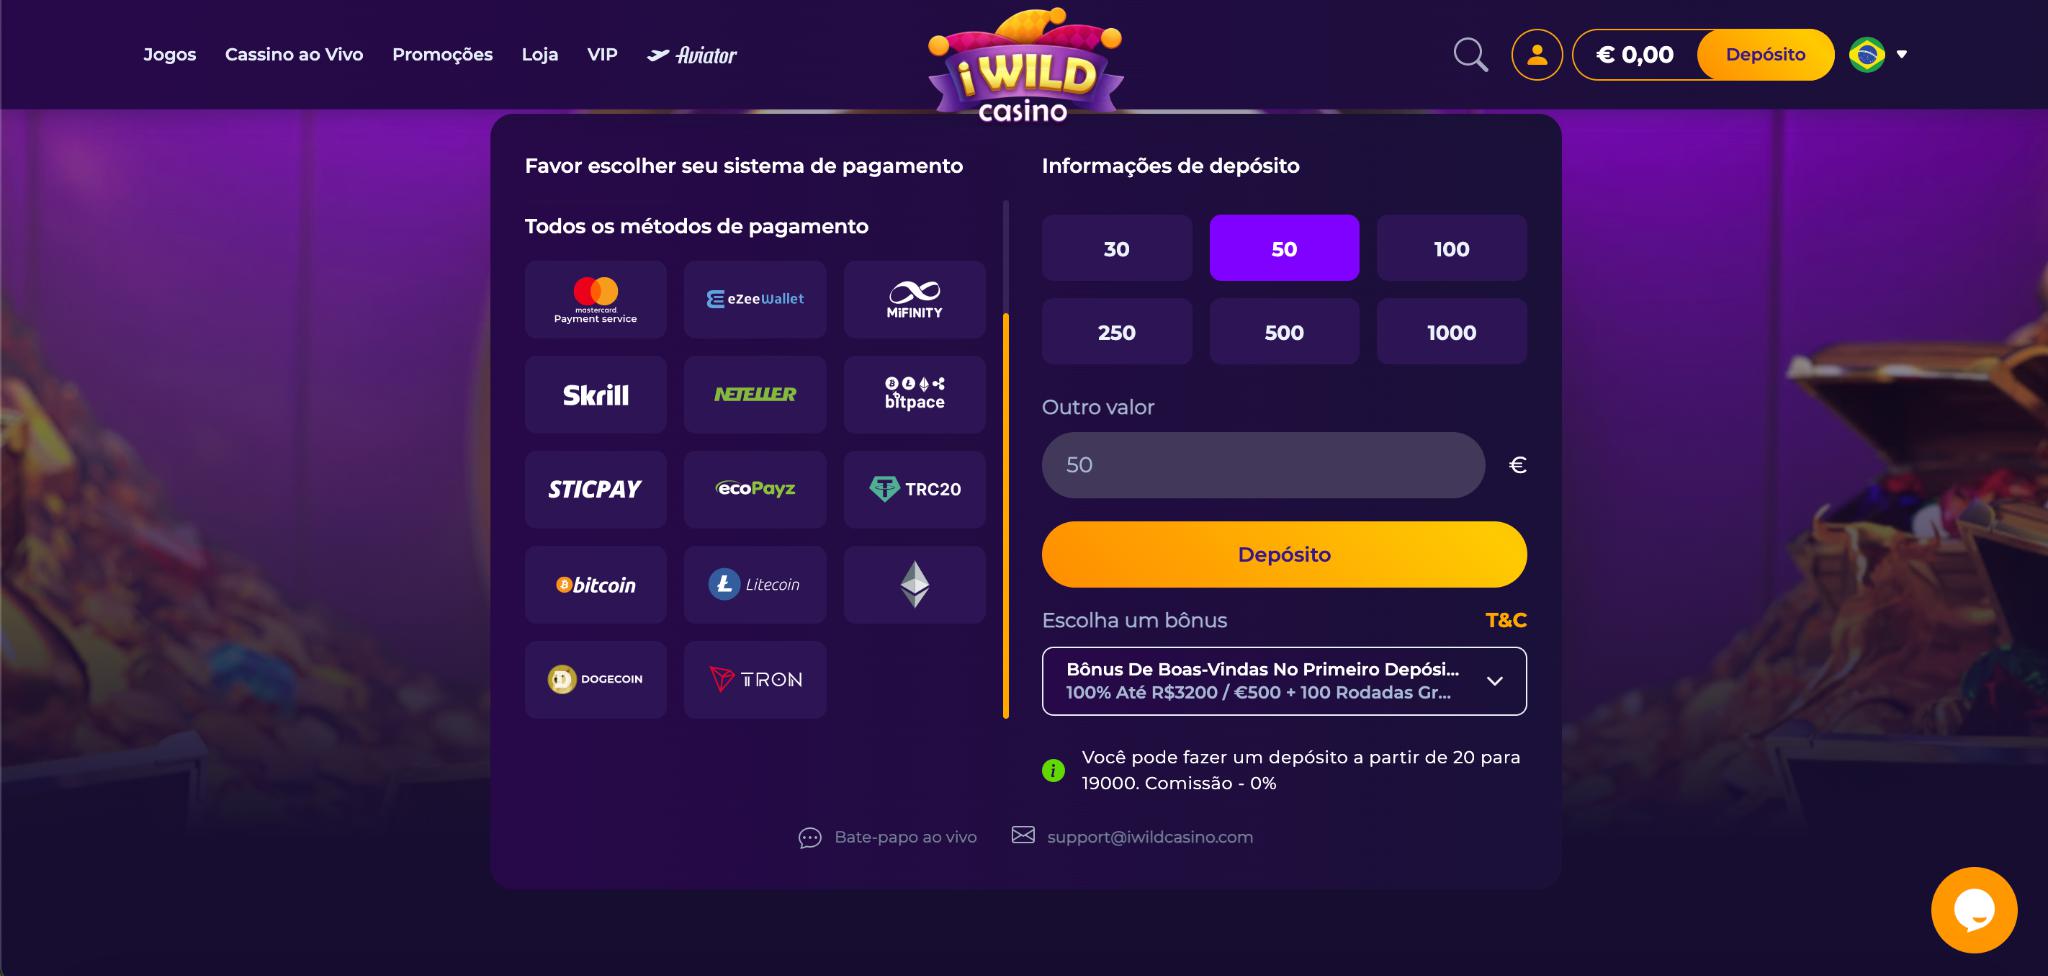 iWild Casino Deposit